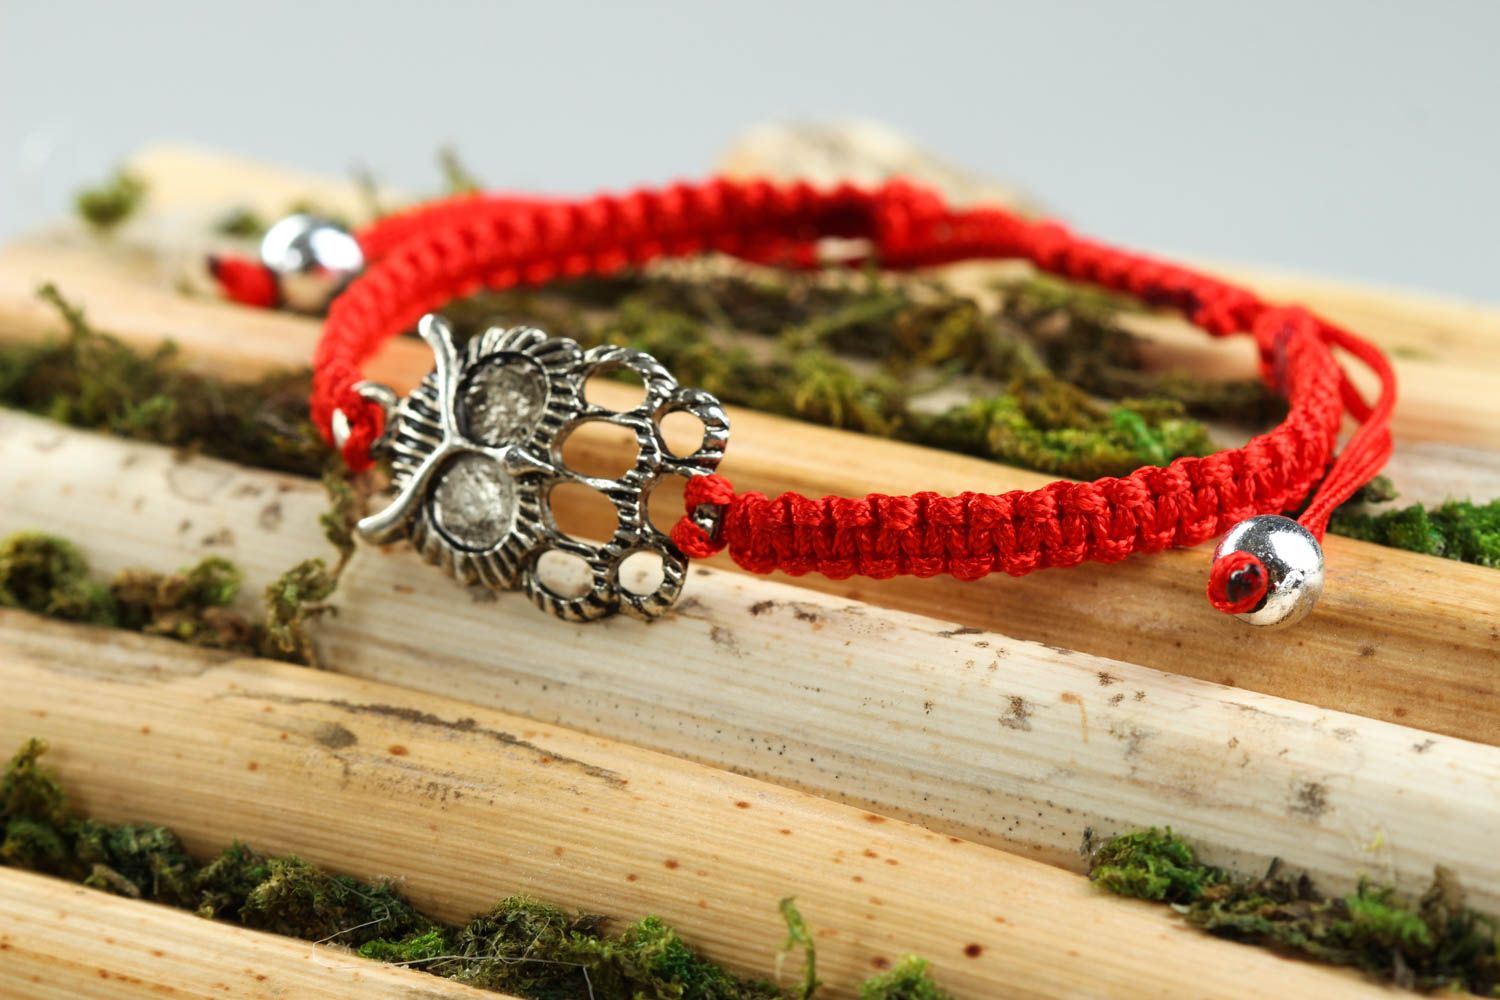 Handmade woven thread bracelet textile bracelet designs cool jewelry gift ideas photo 1